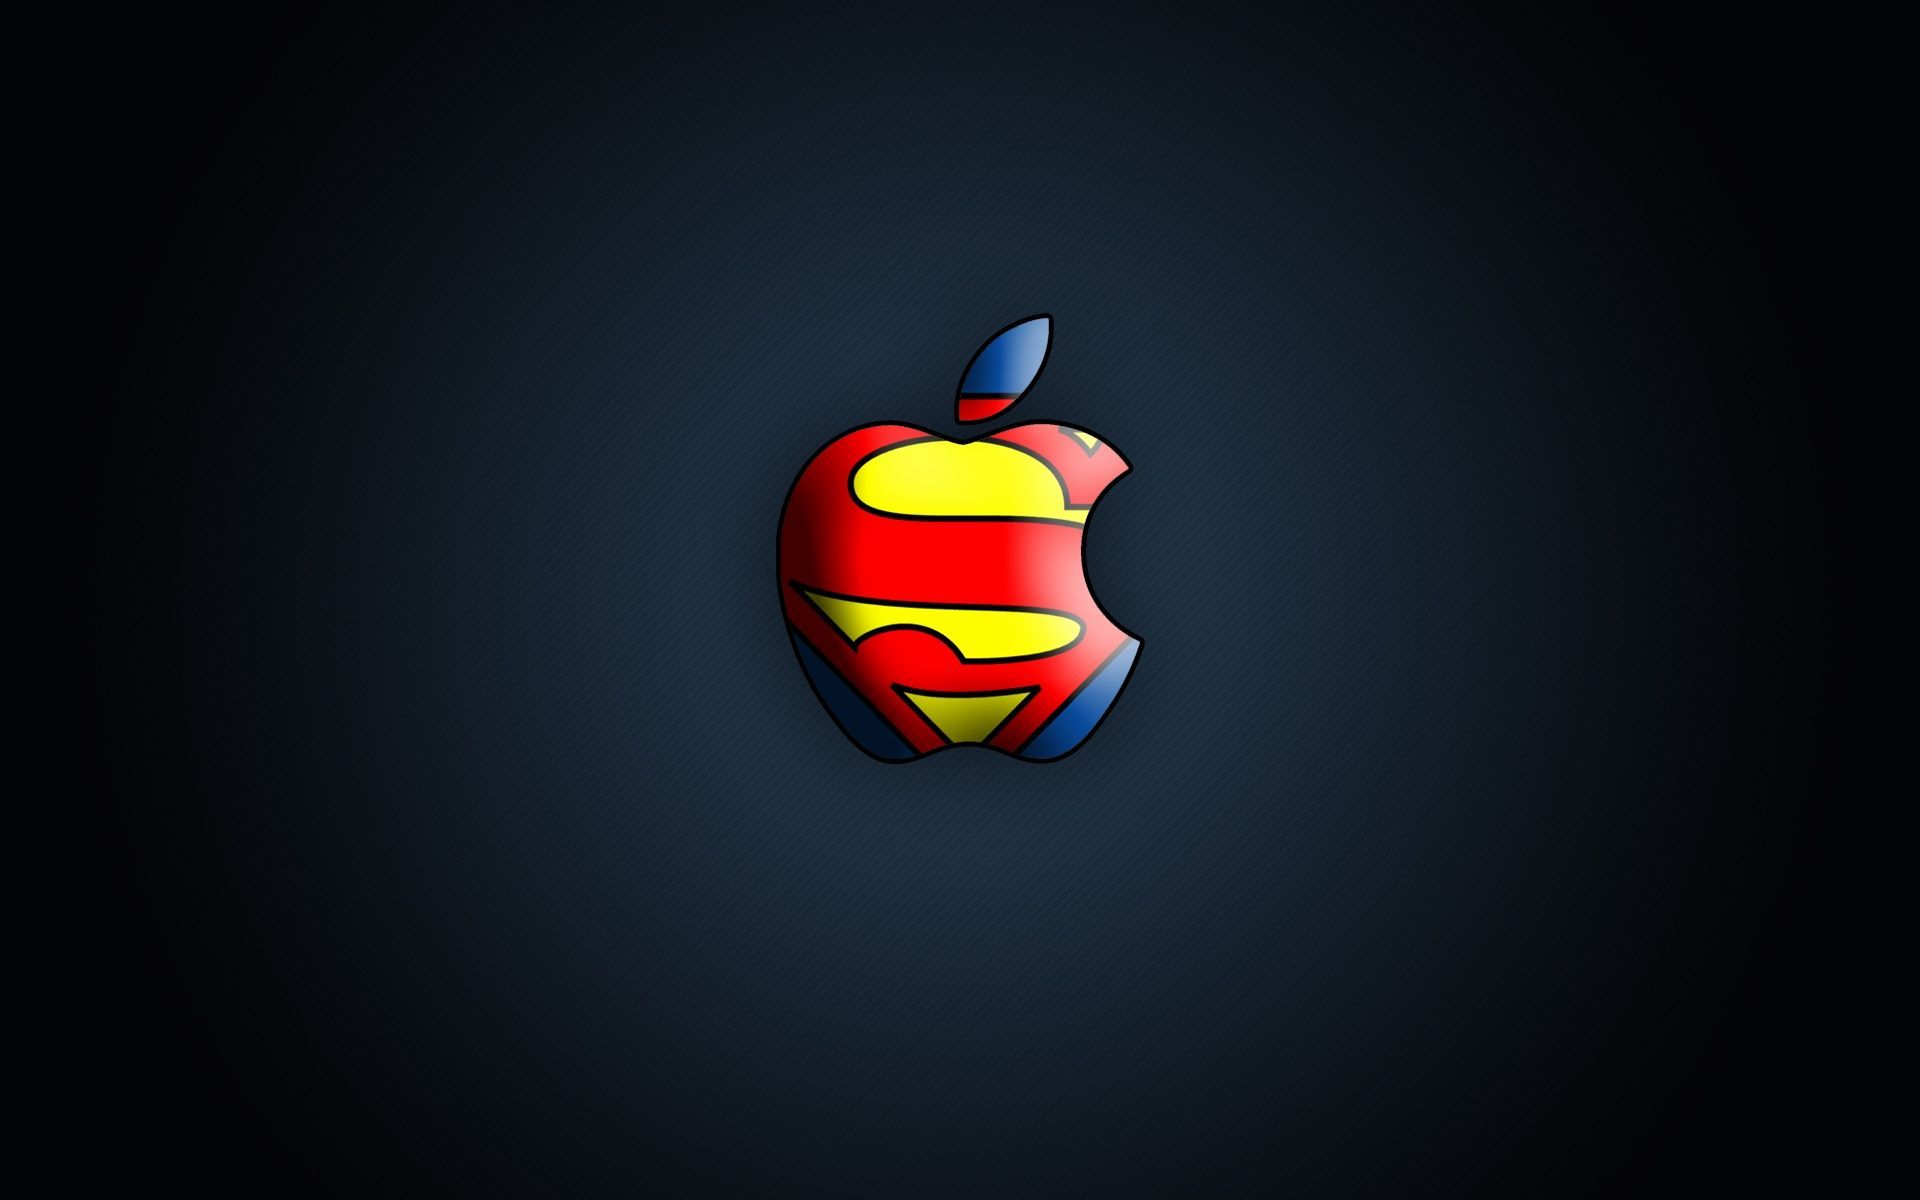 Cool Apple Logos - wallpaper